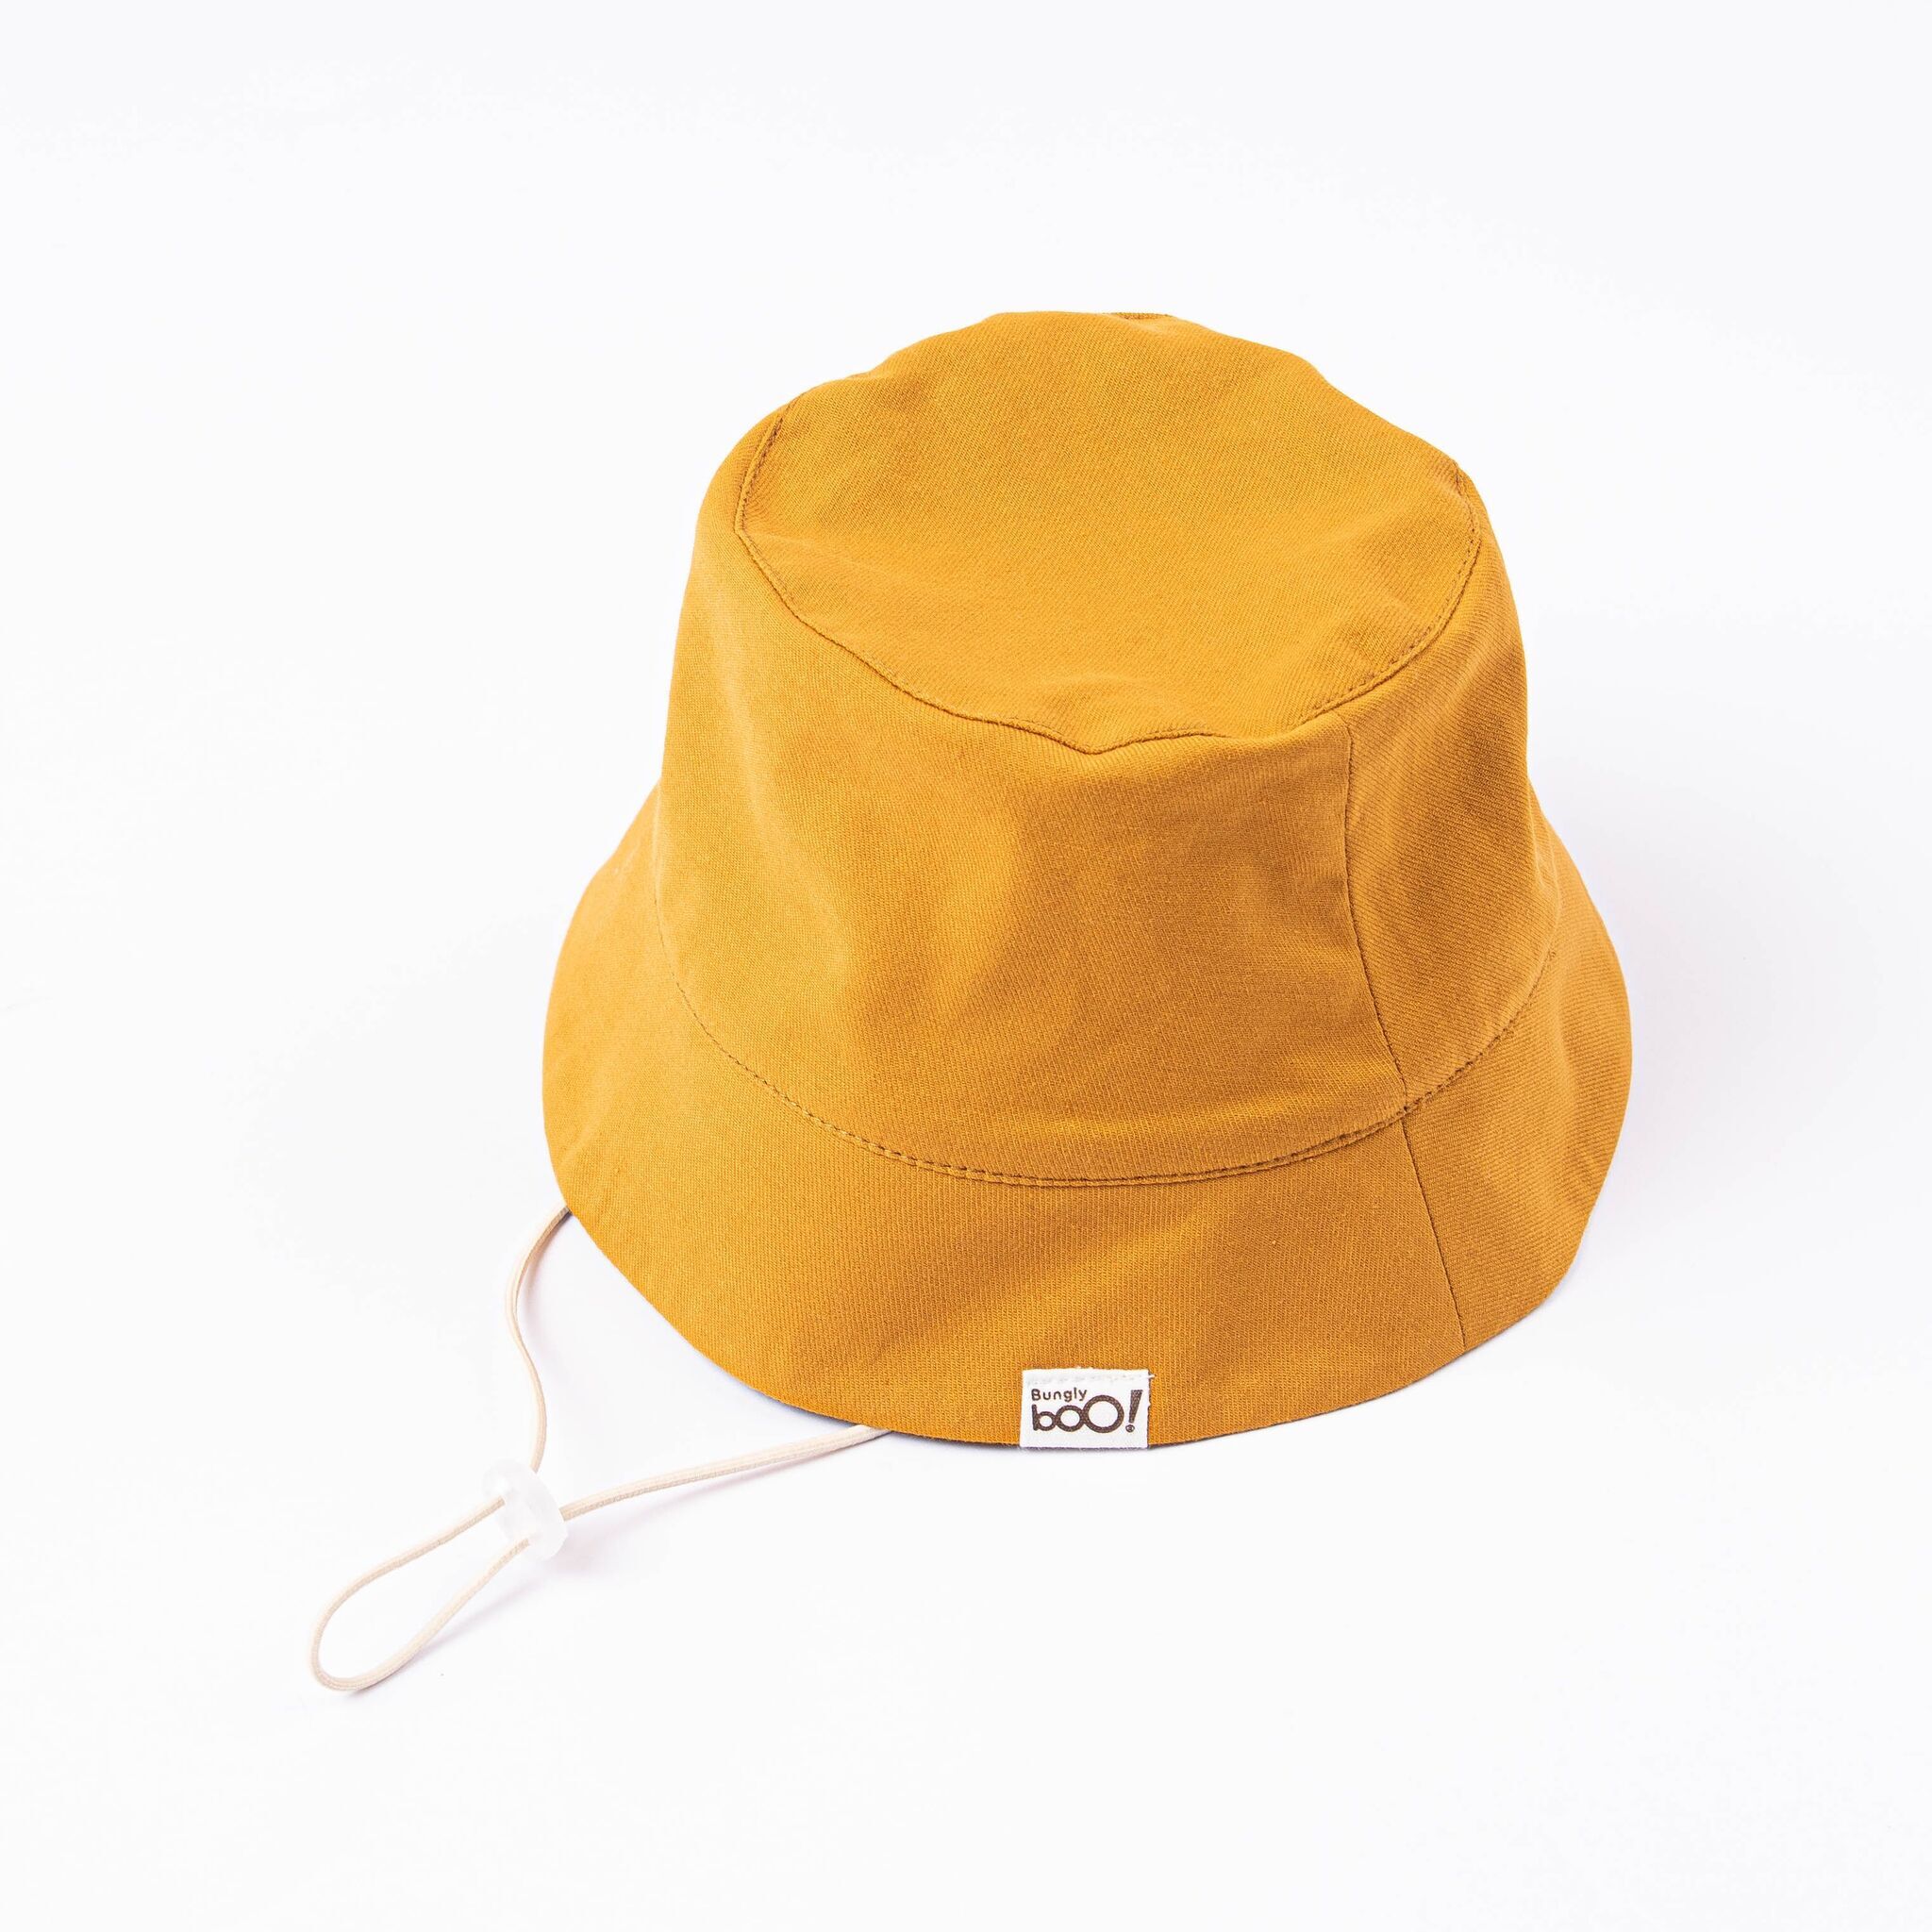 Cotton panama hat - Mustard